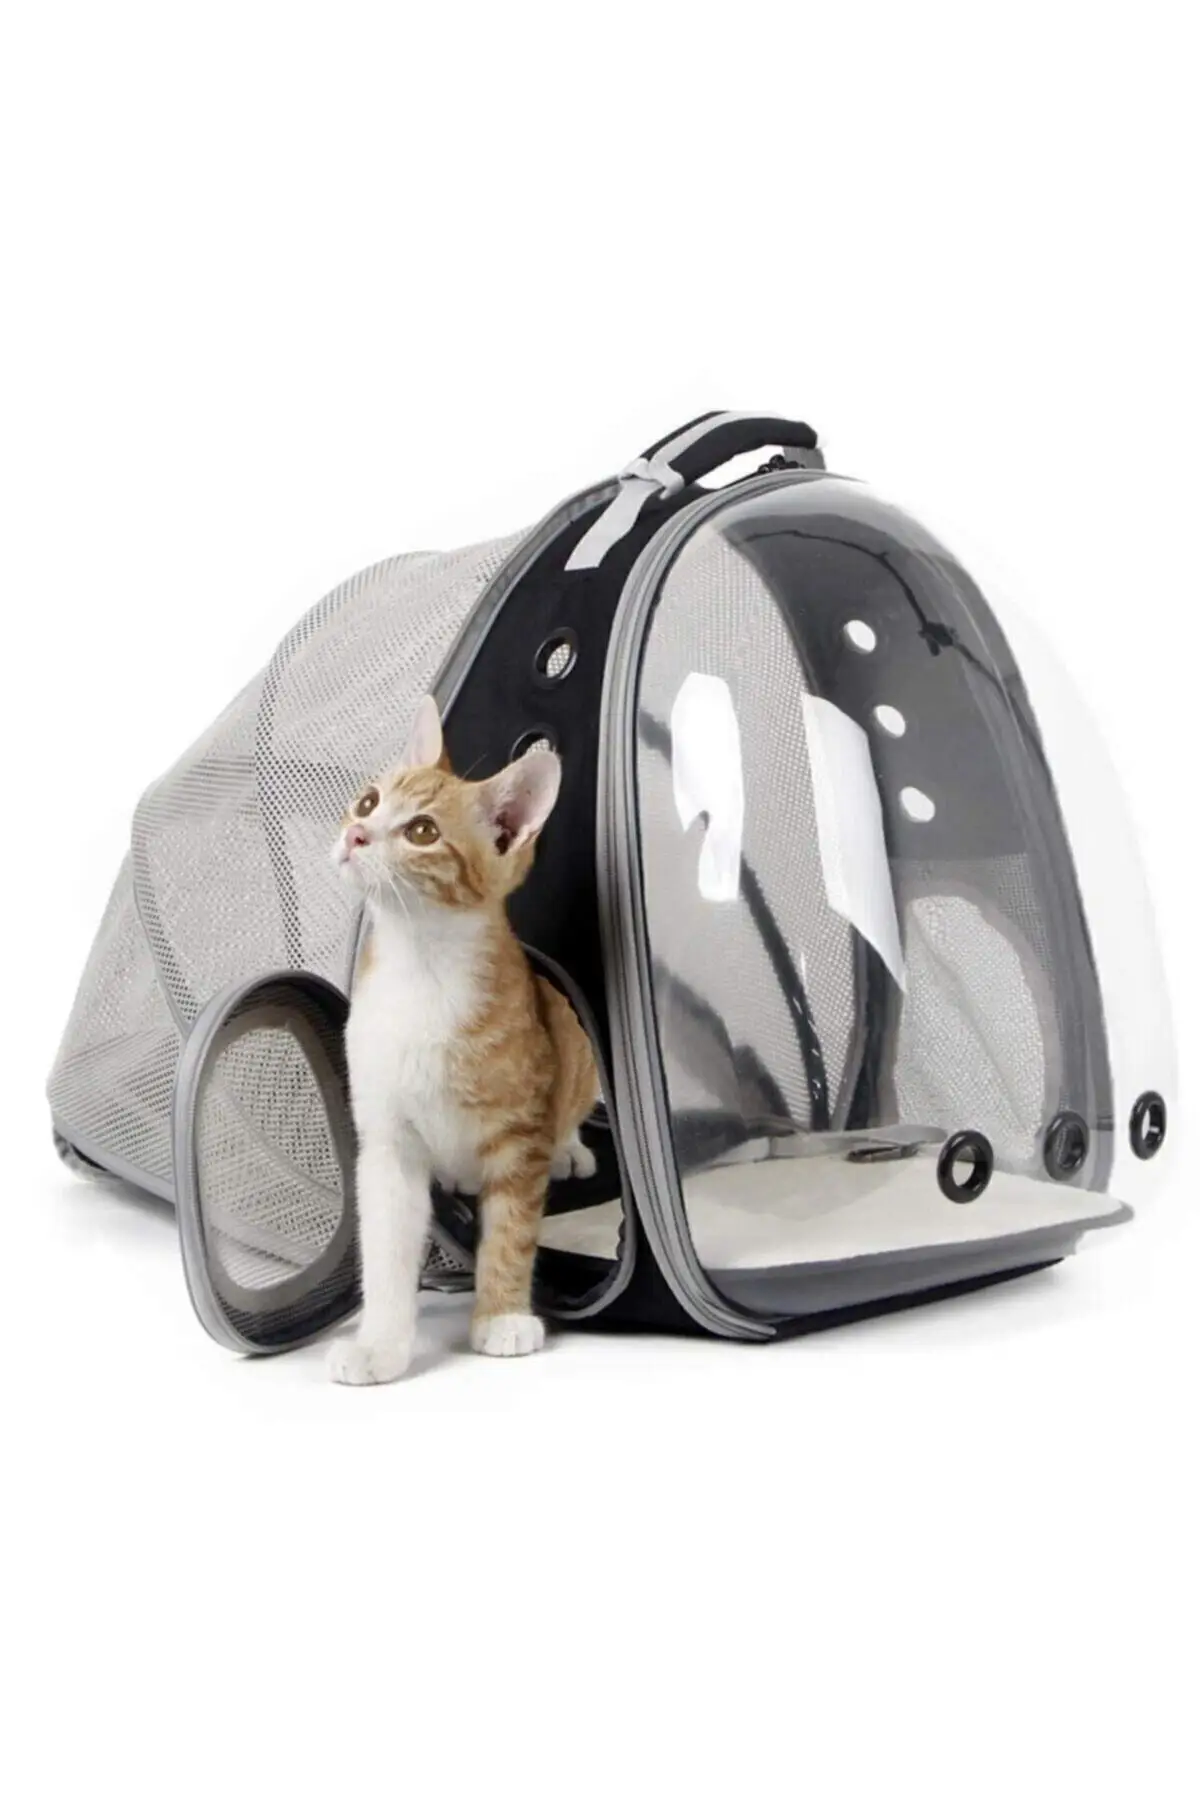 Mesh Openable Transparent Astronaut Cat Pet Carrying Bag Black Cave god cat pet home nest box sleeping bed